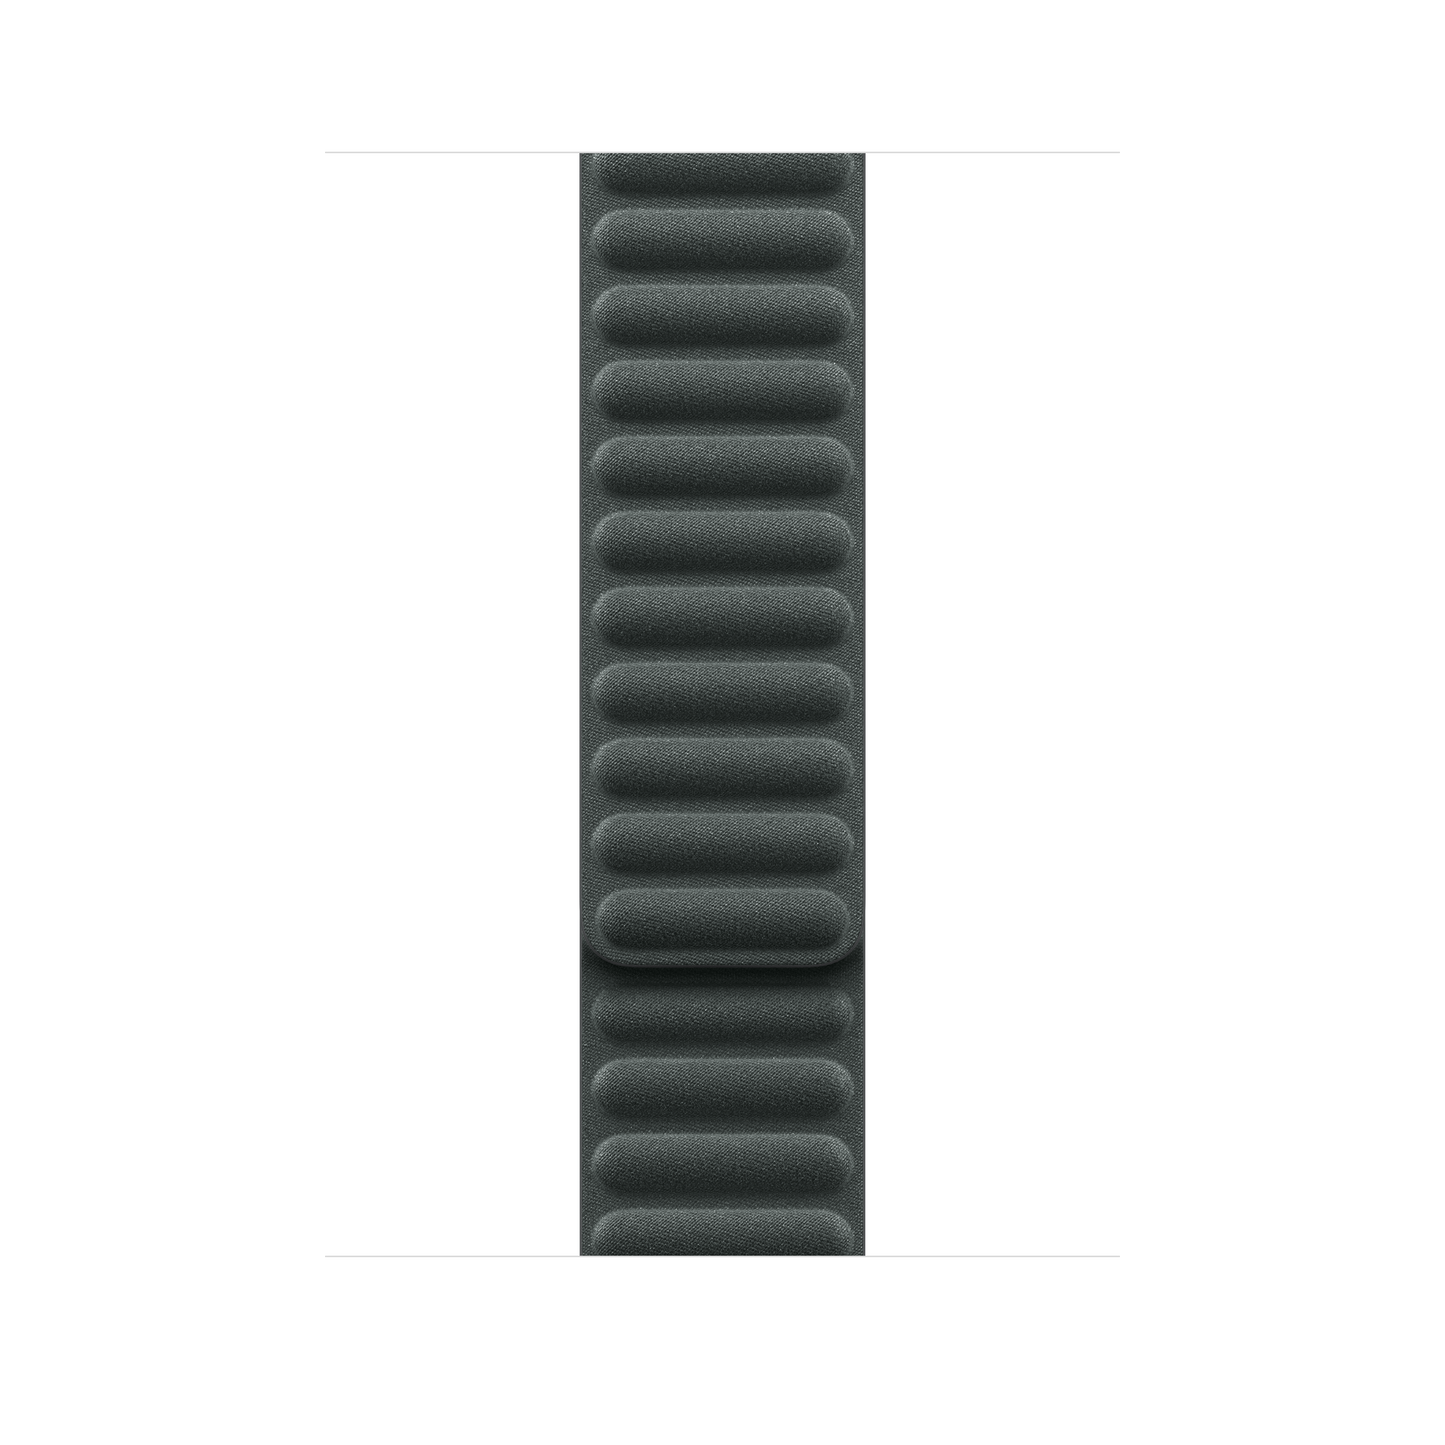 Correa de eslabones magnética verde perenne (45 mm) - Talla S/M